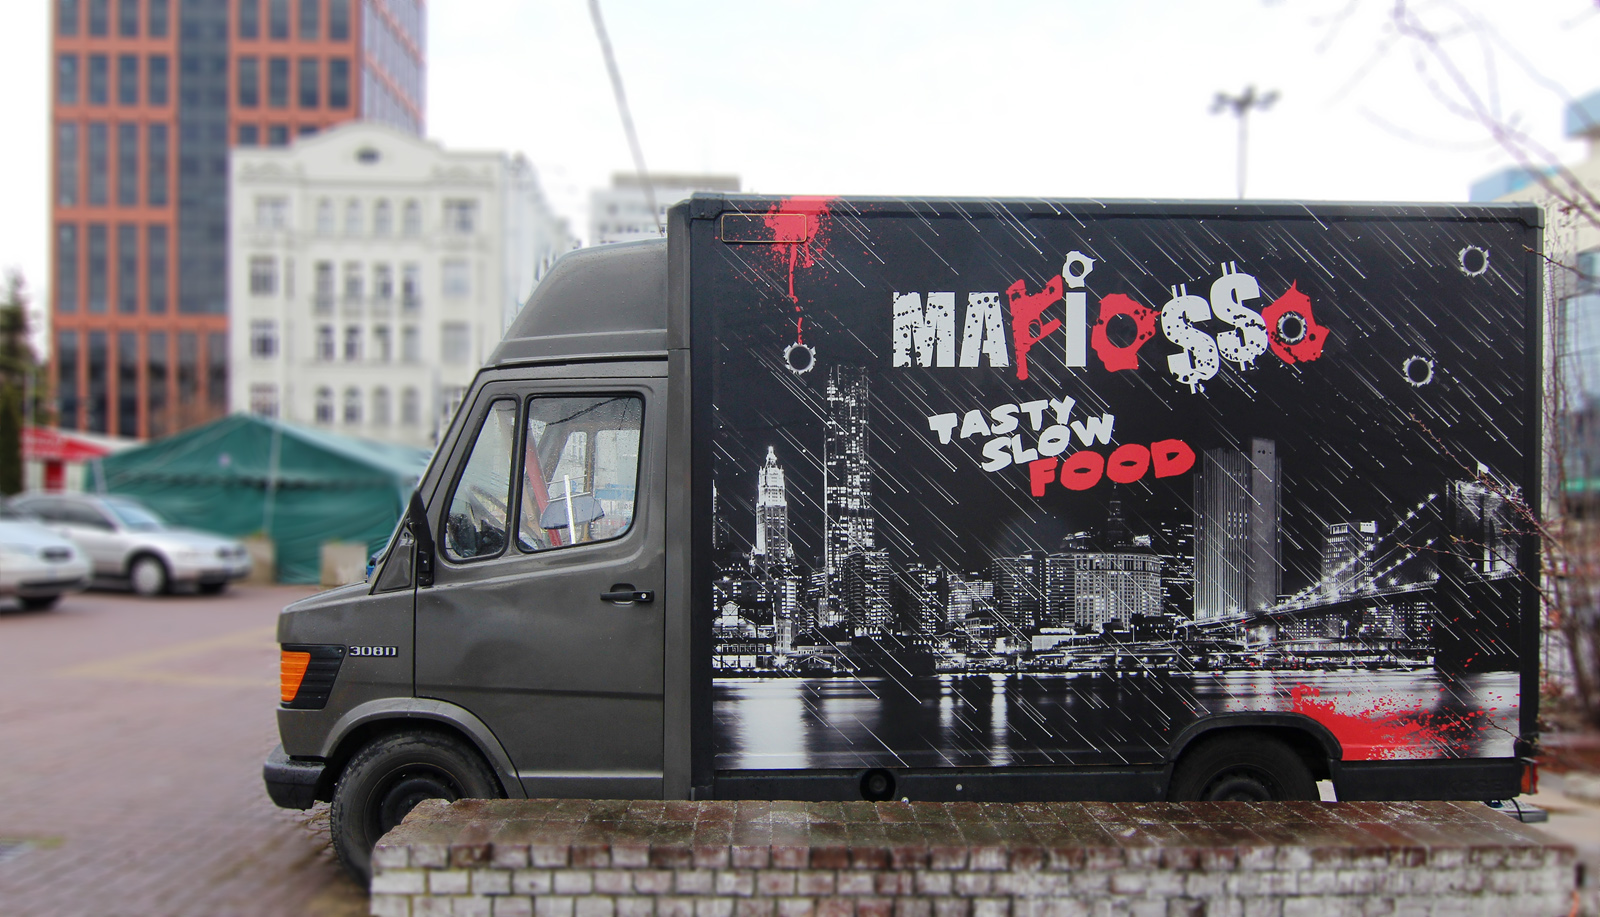 Mafioso Food Truck